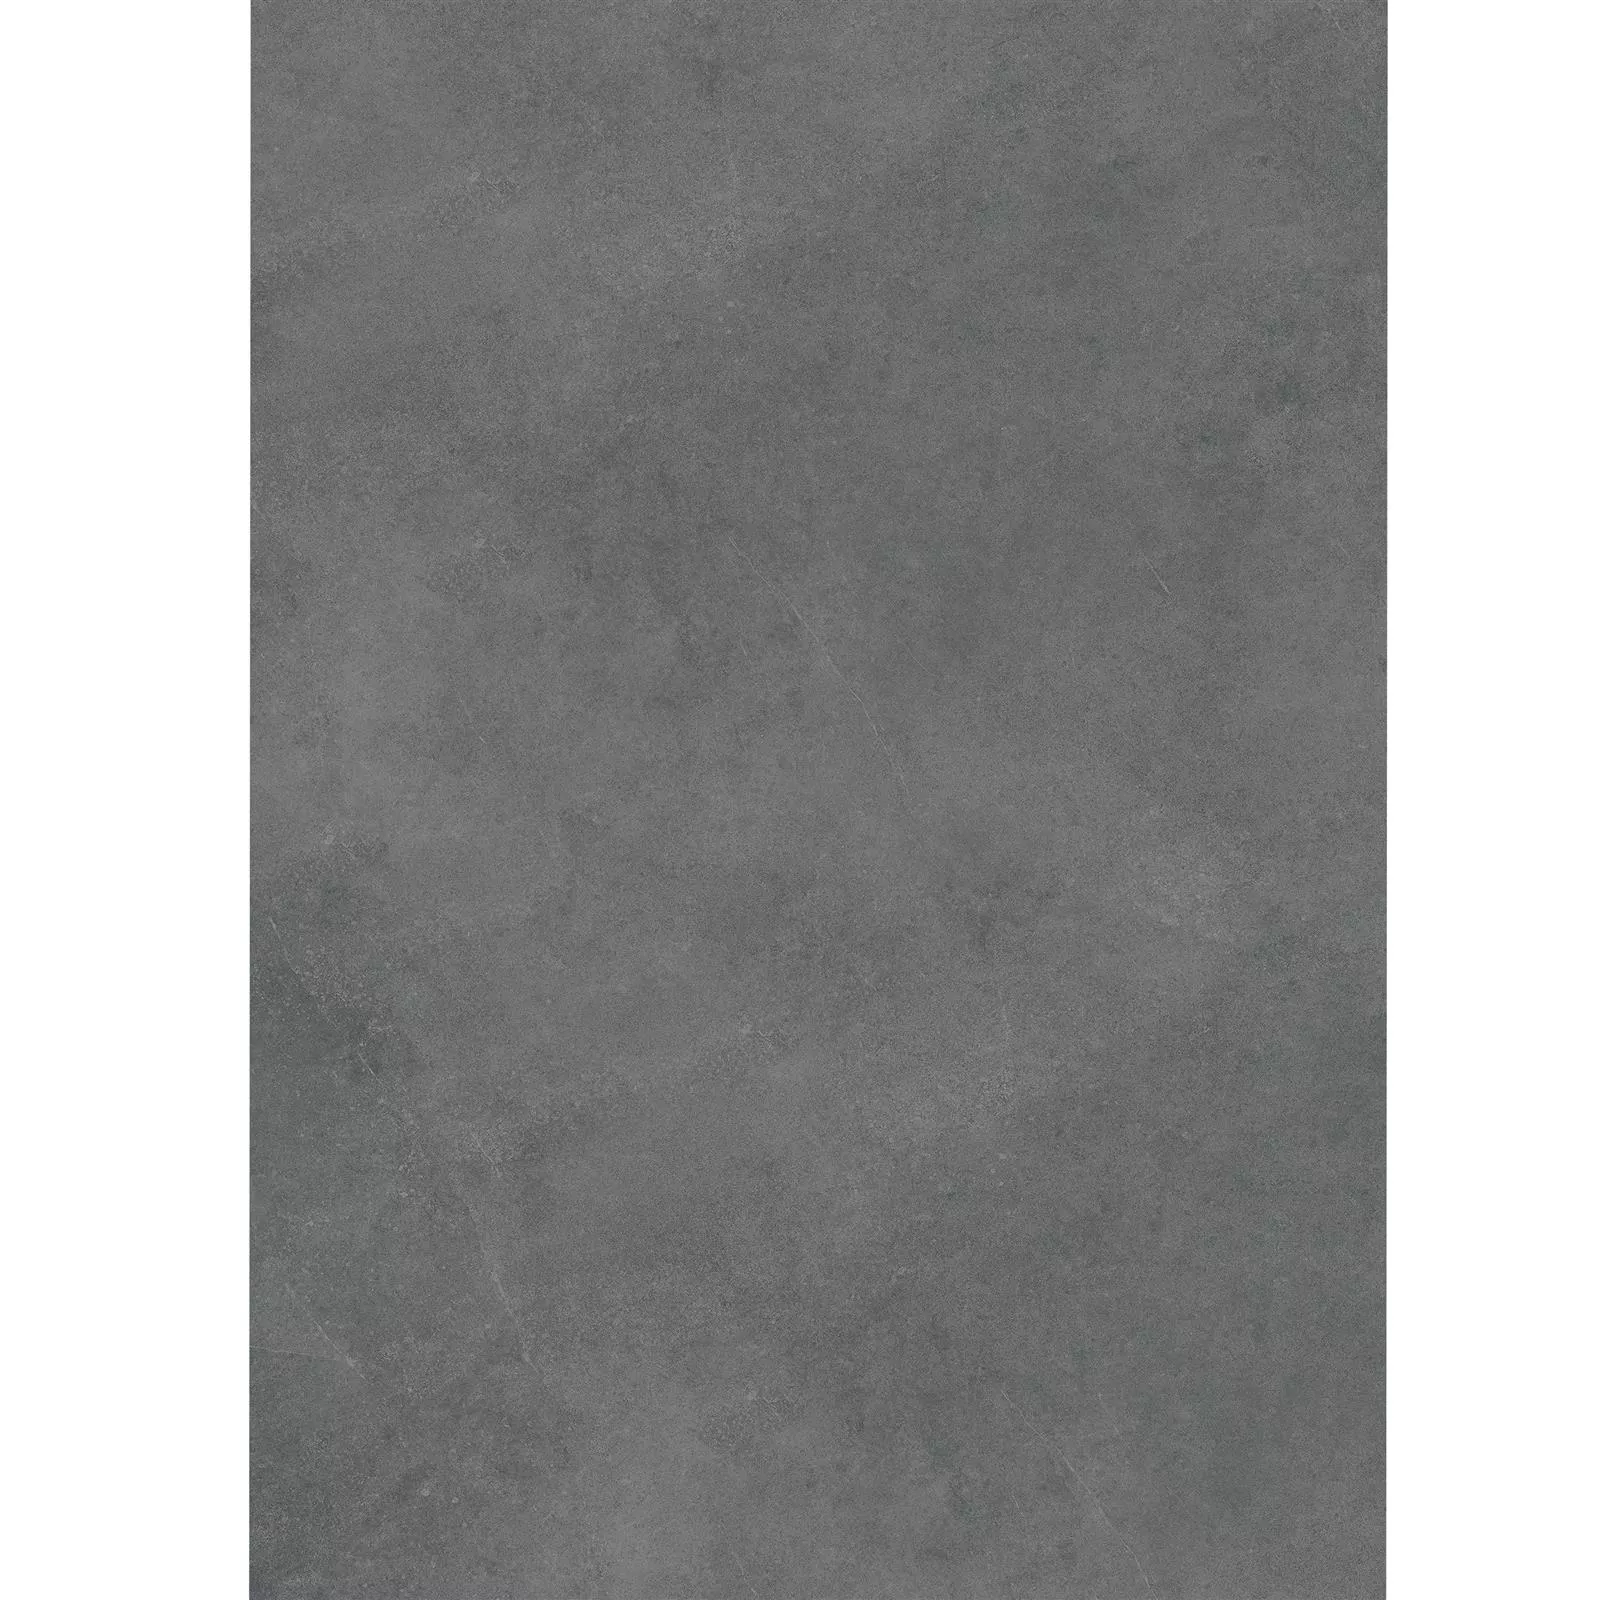 Terass Klinker Cement Optik Glinde Antracit 60x120cm